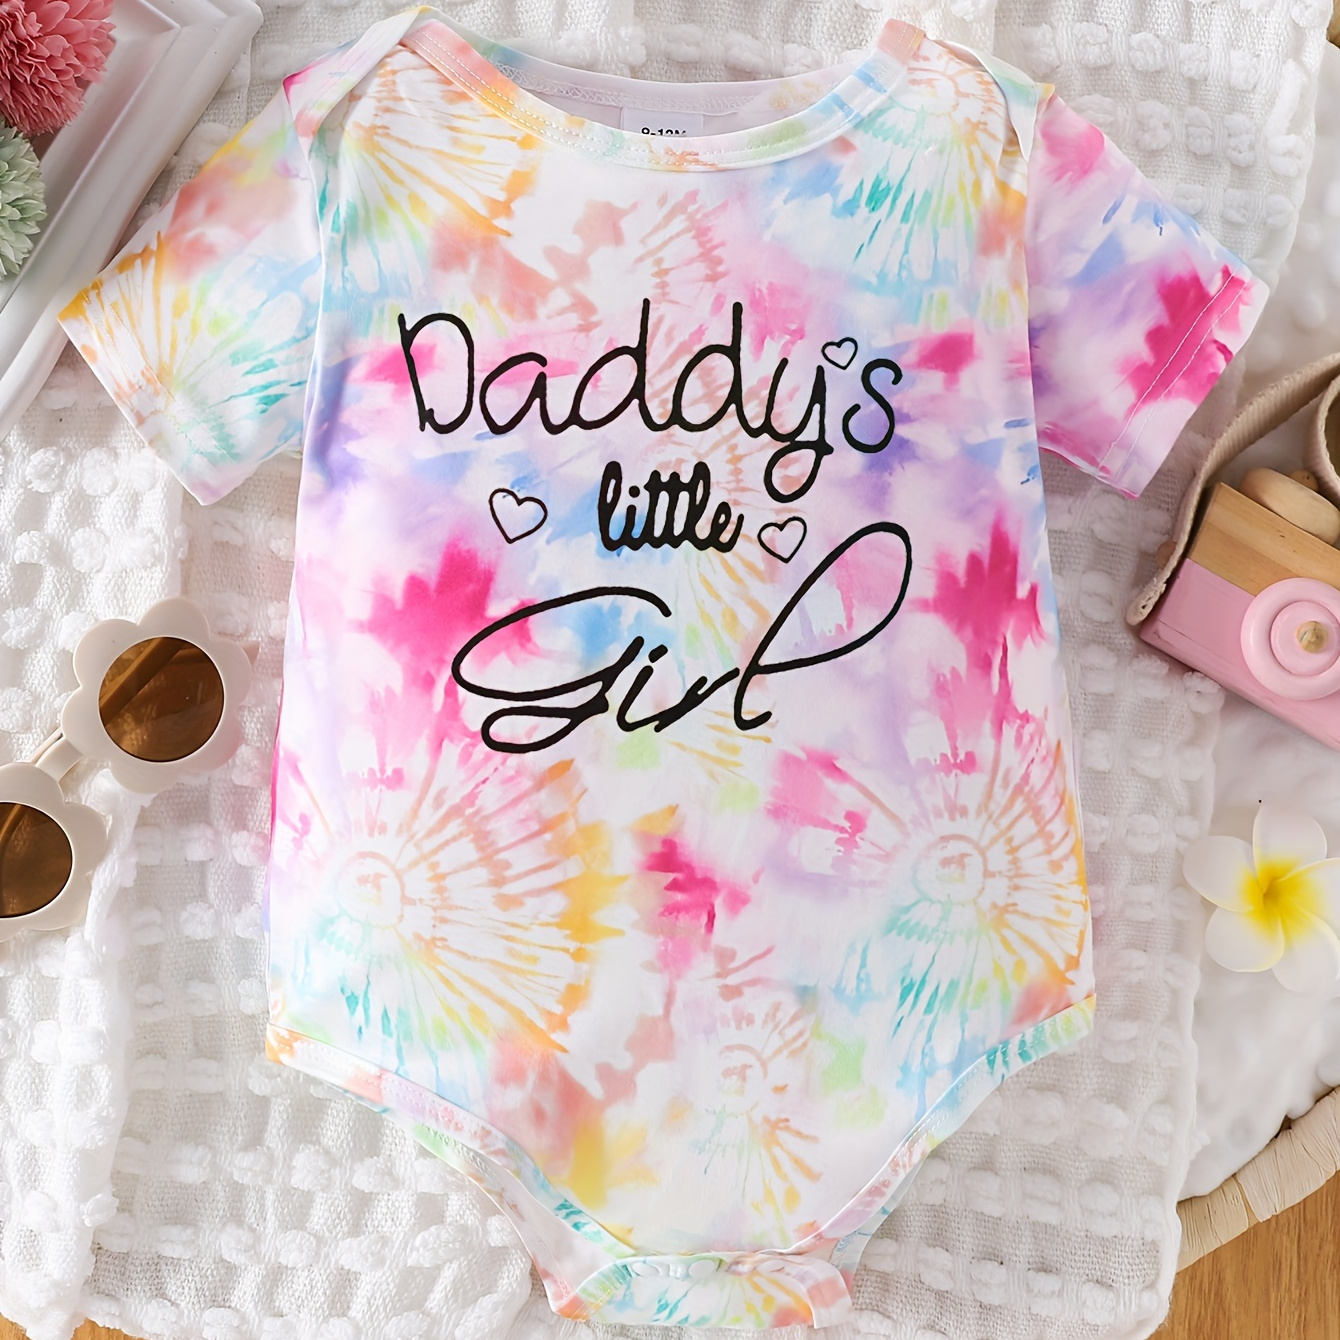 

Baby's "daddy's Little Girl" Print Tie-dye Triangle Bodysuit, Casual Short Sleeve Romper, Toddler & Infant Girl's Onesie For Summer, As Gift